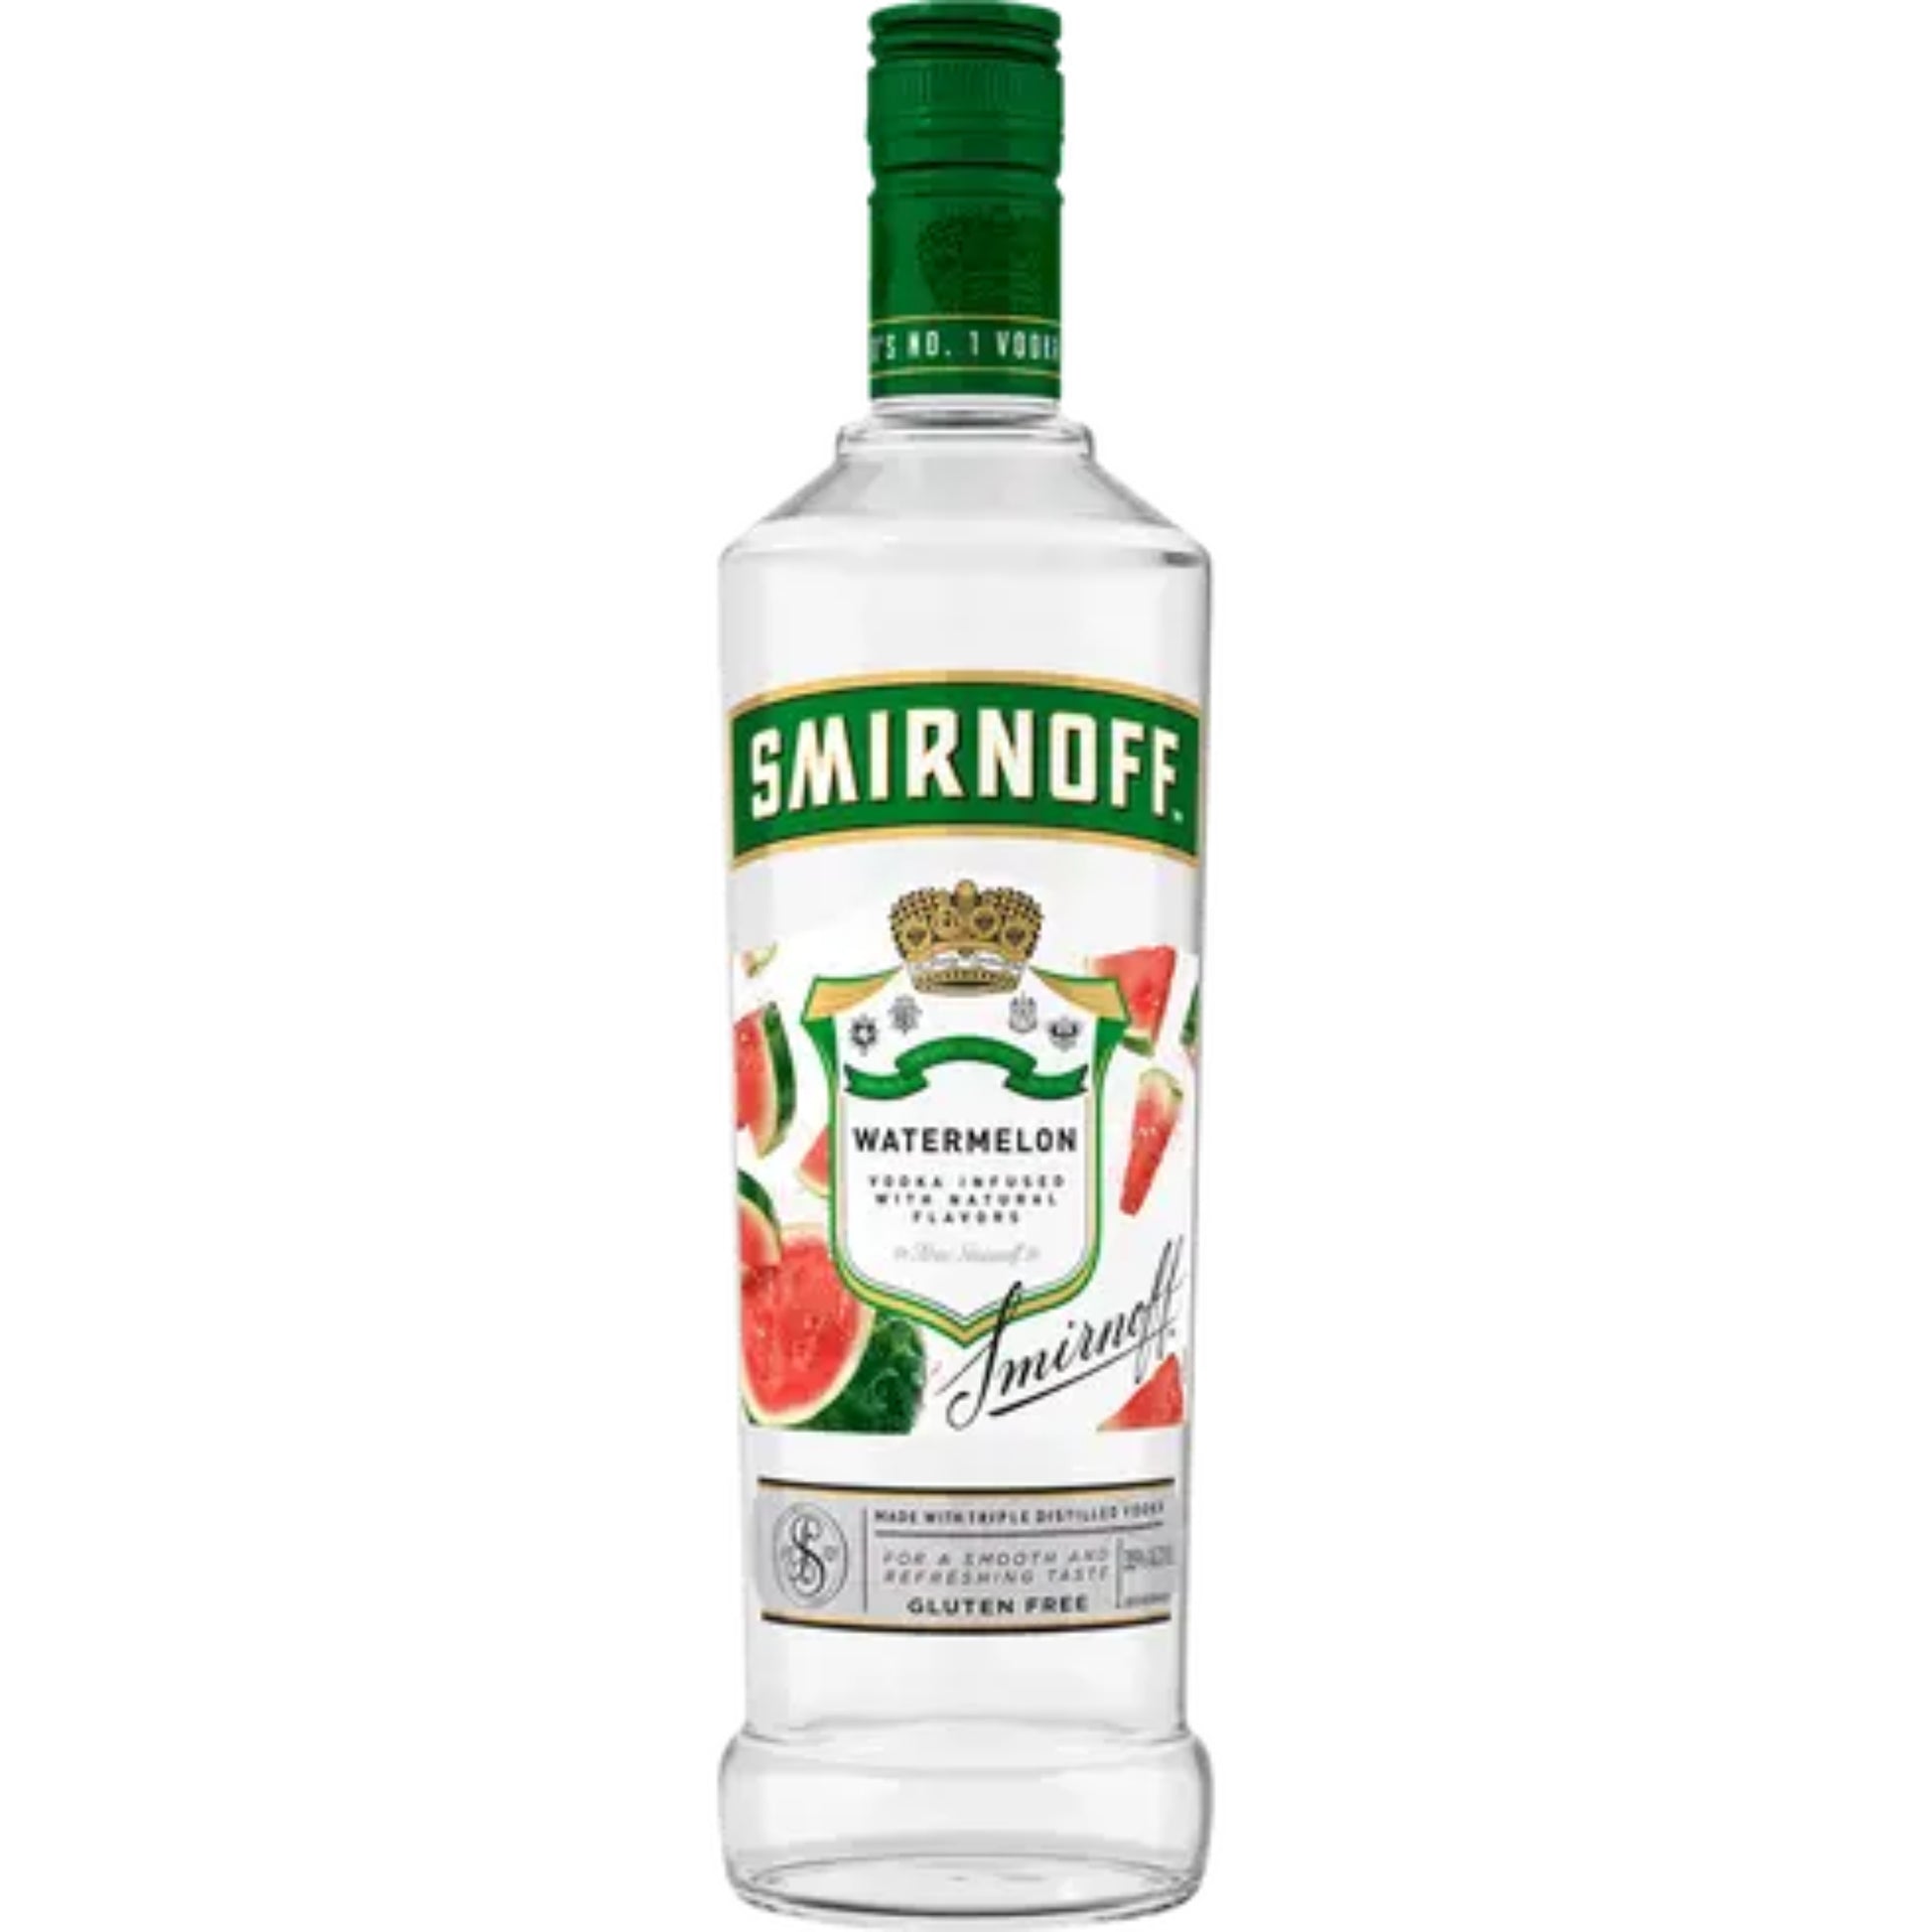 Smirnoff Watermelon Vodka - Liquor Geeks